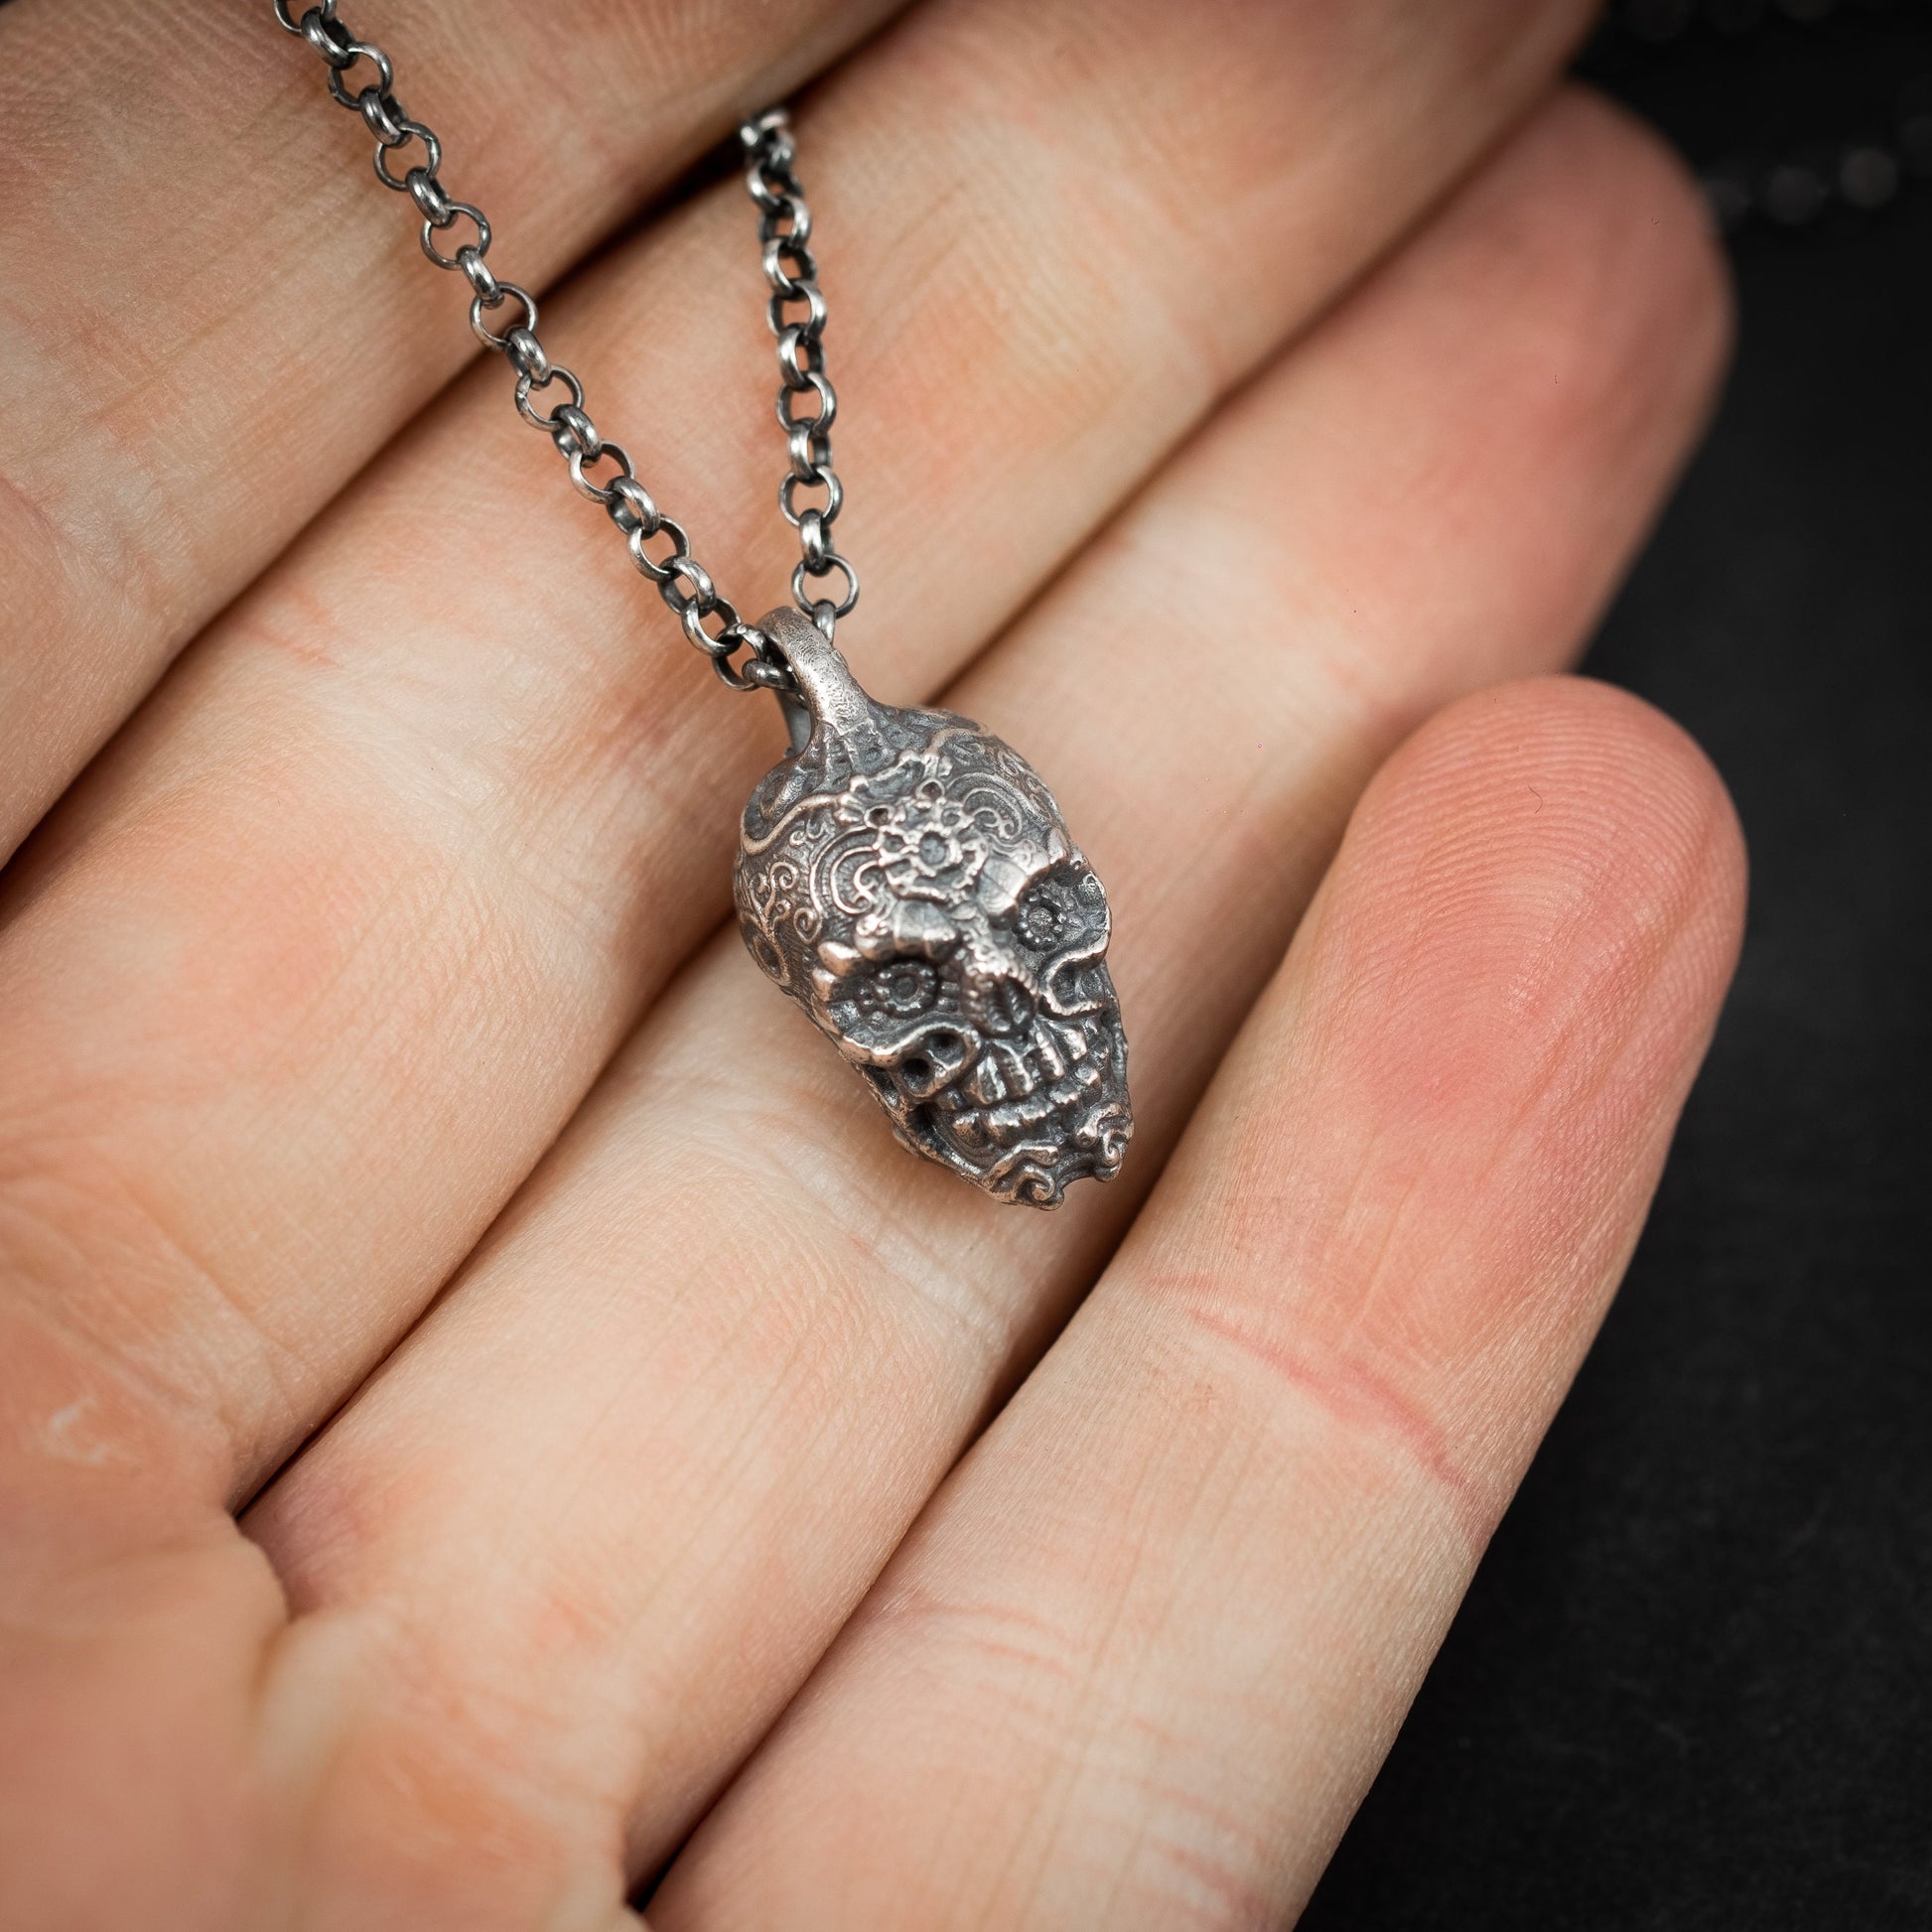 Memento mori Rustic Skull Silver Necklace for men, Boyfriend gift, best friend gift, handmade goth oxidized jewelry, mens necklace